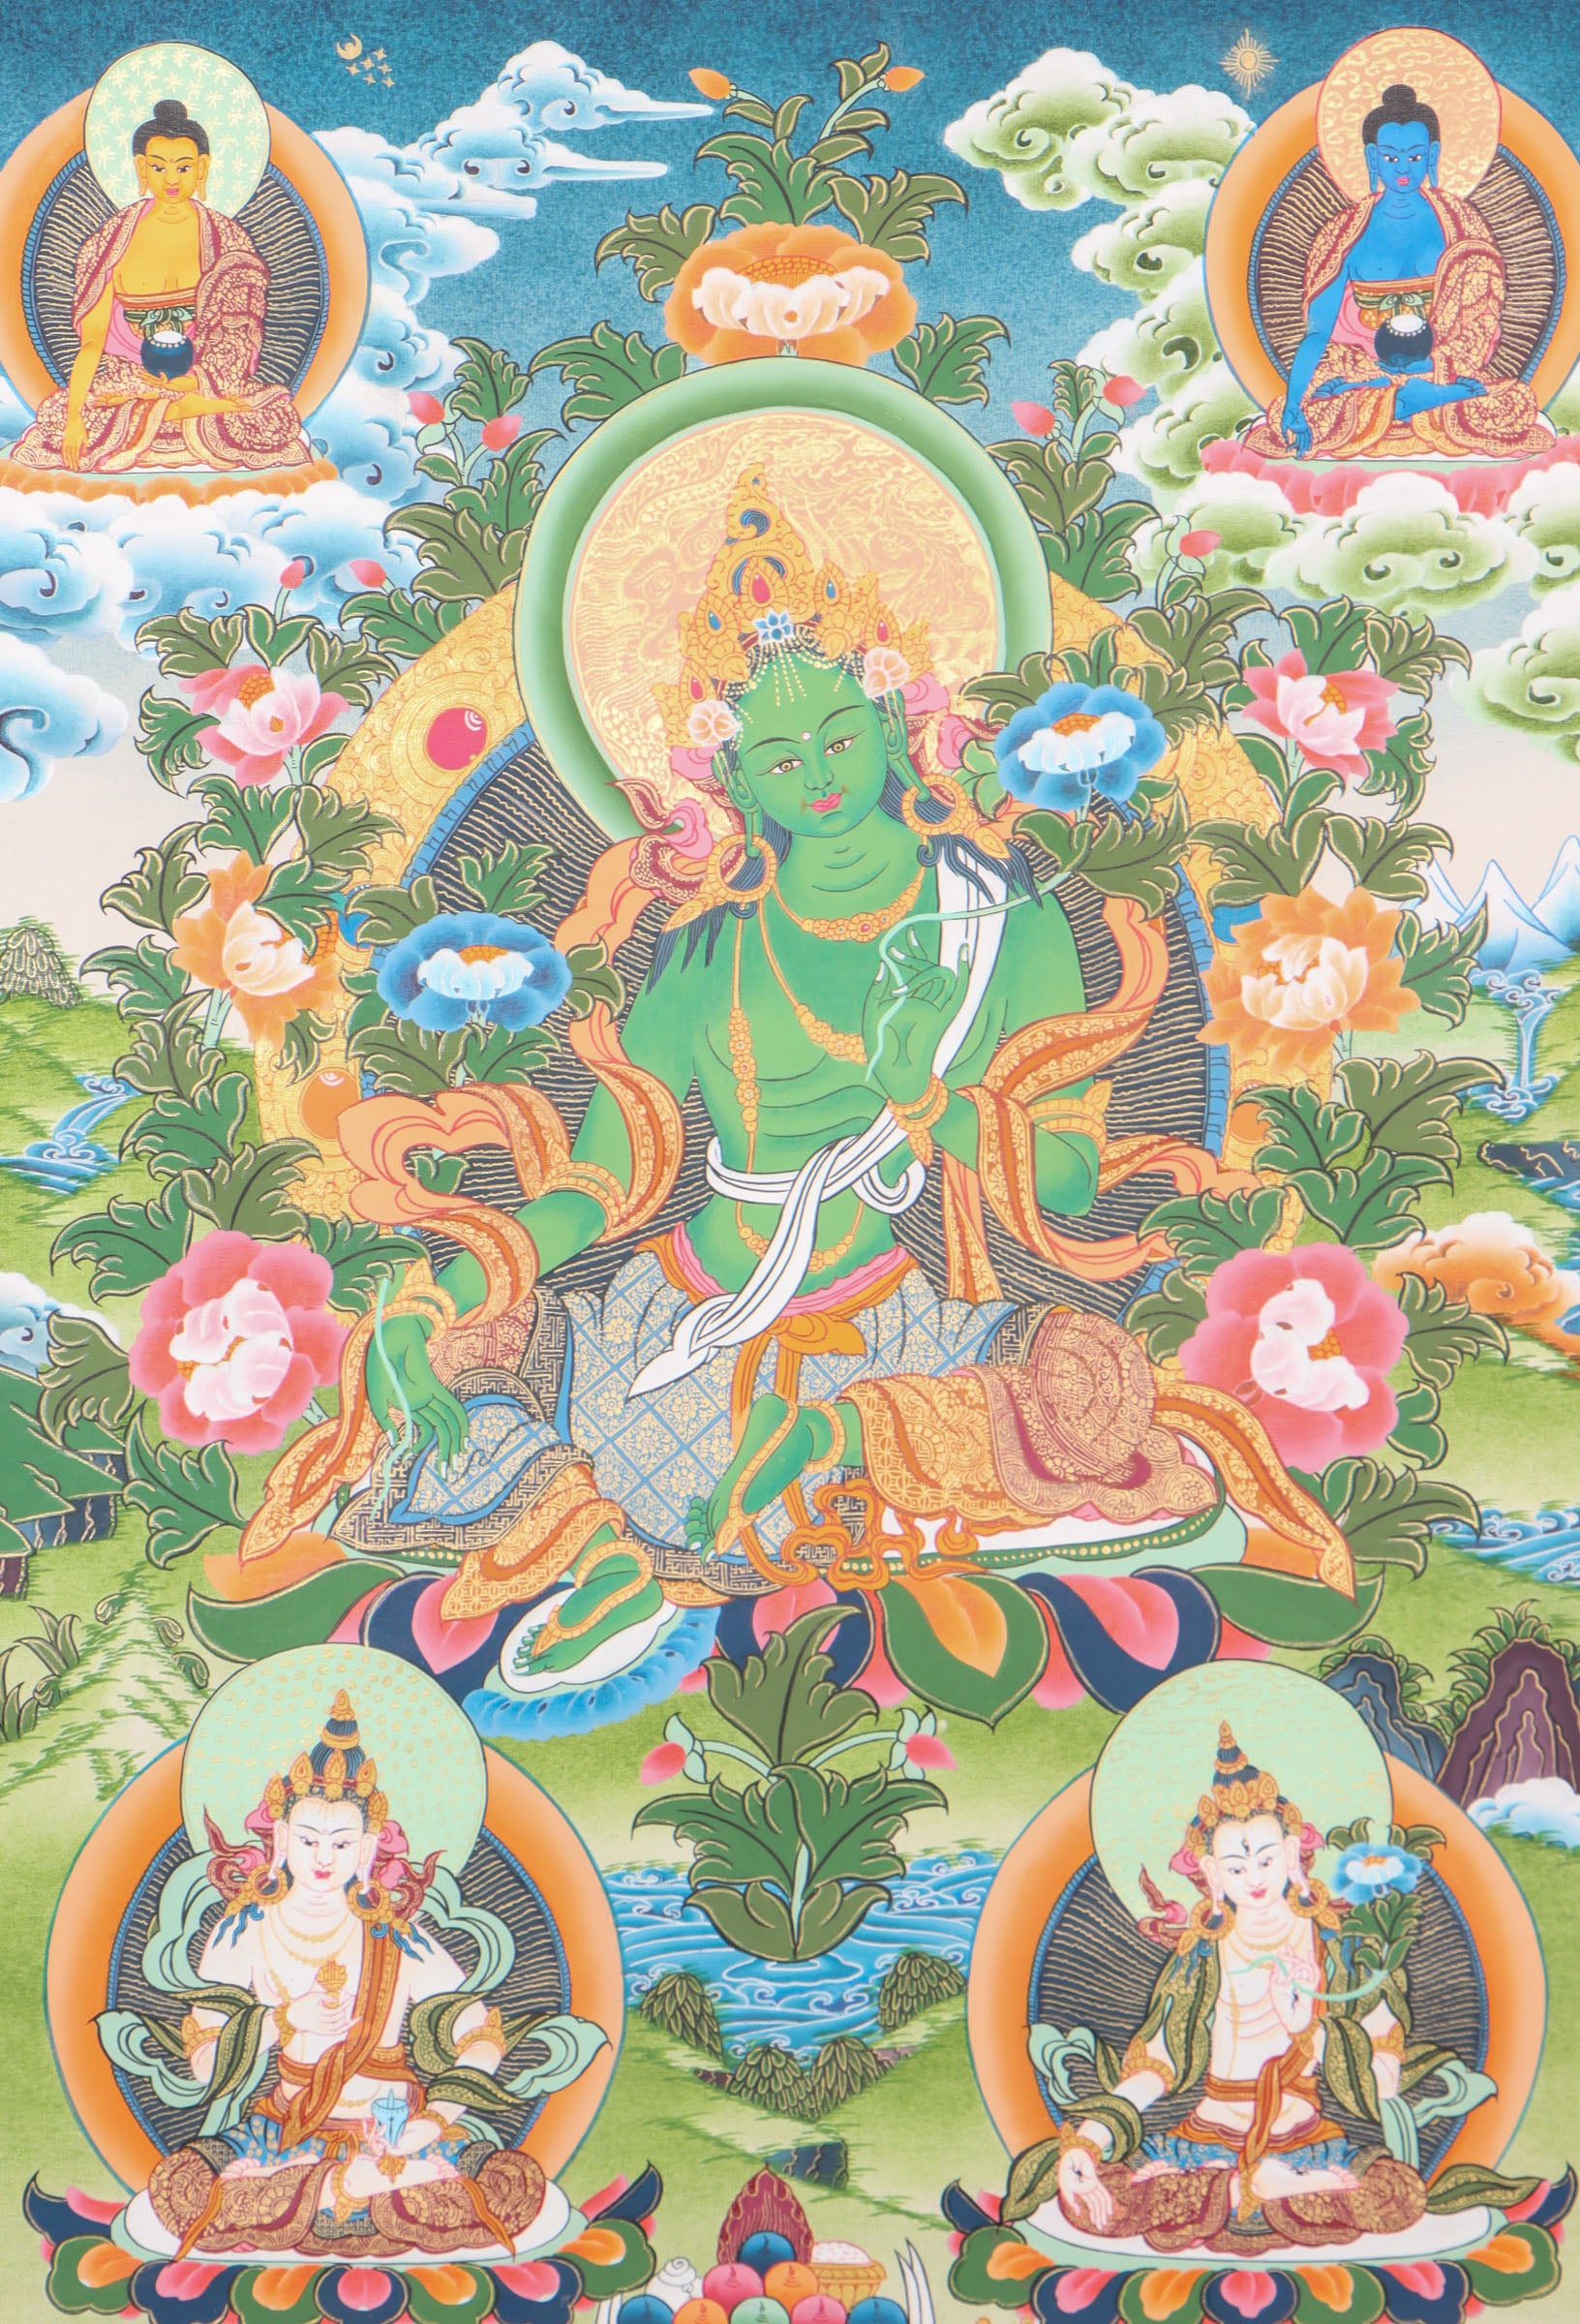 Green Tara Thangka for meditation.